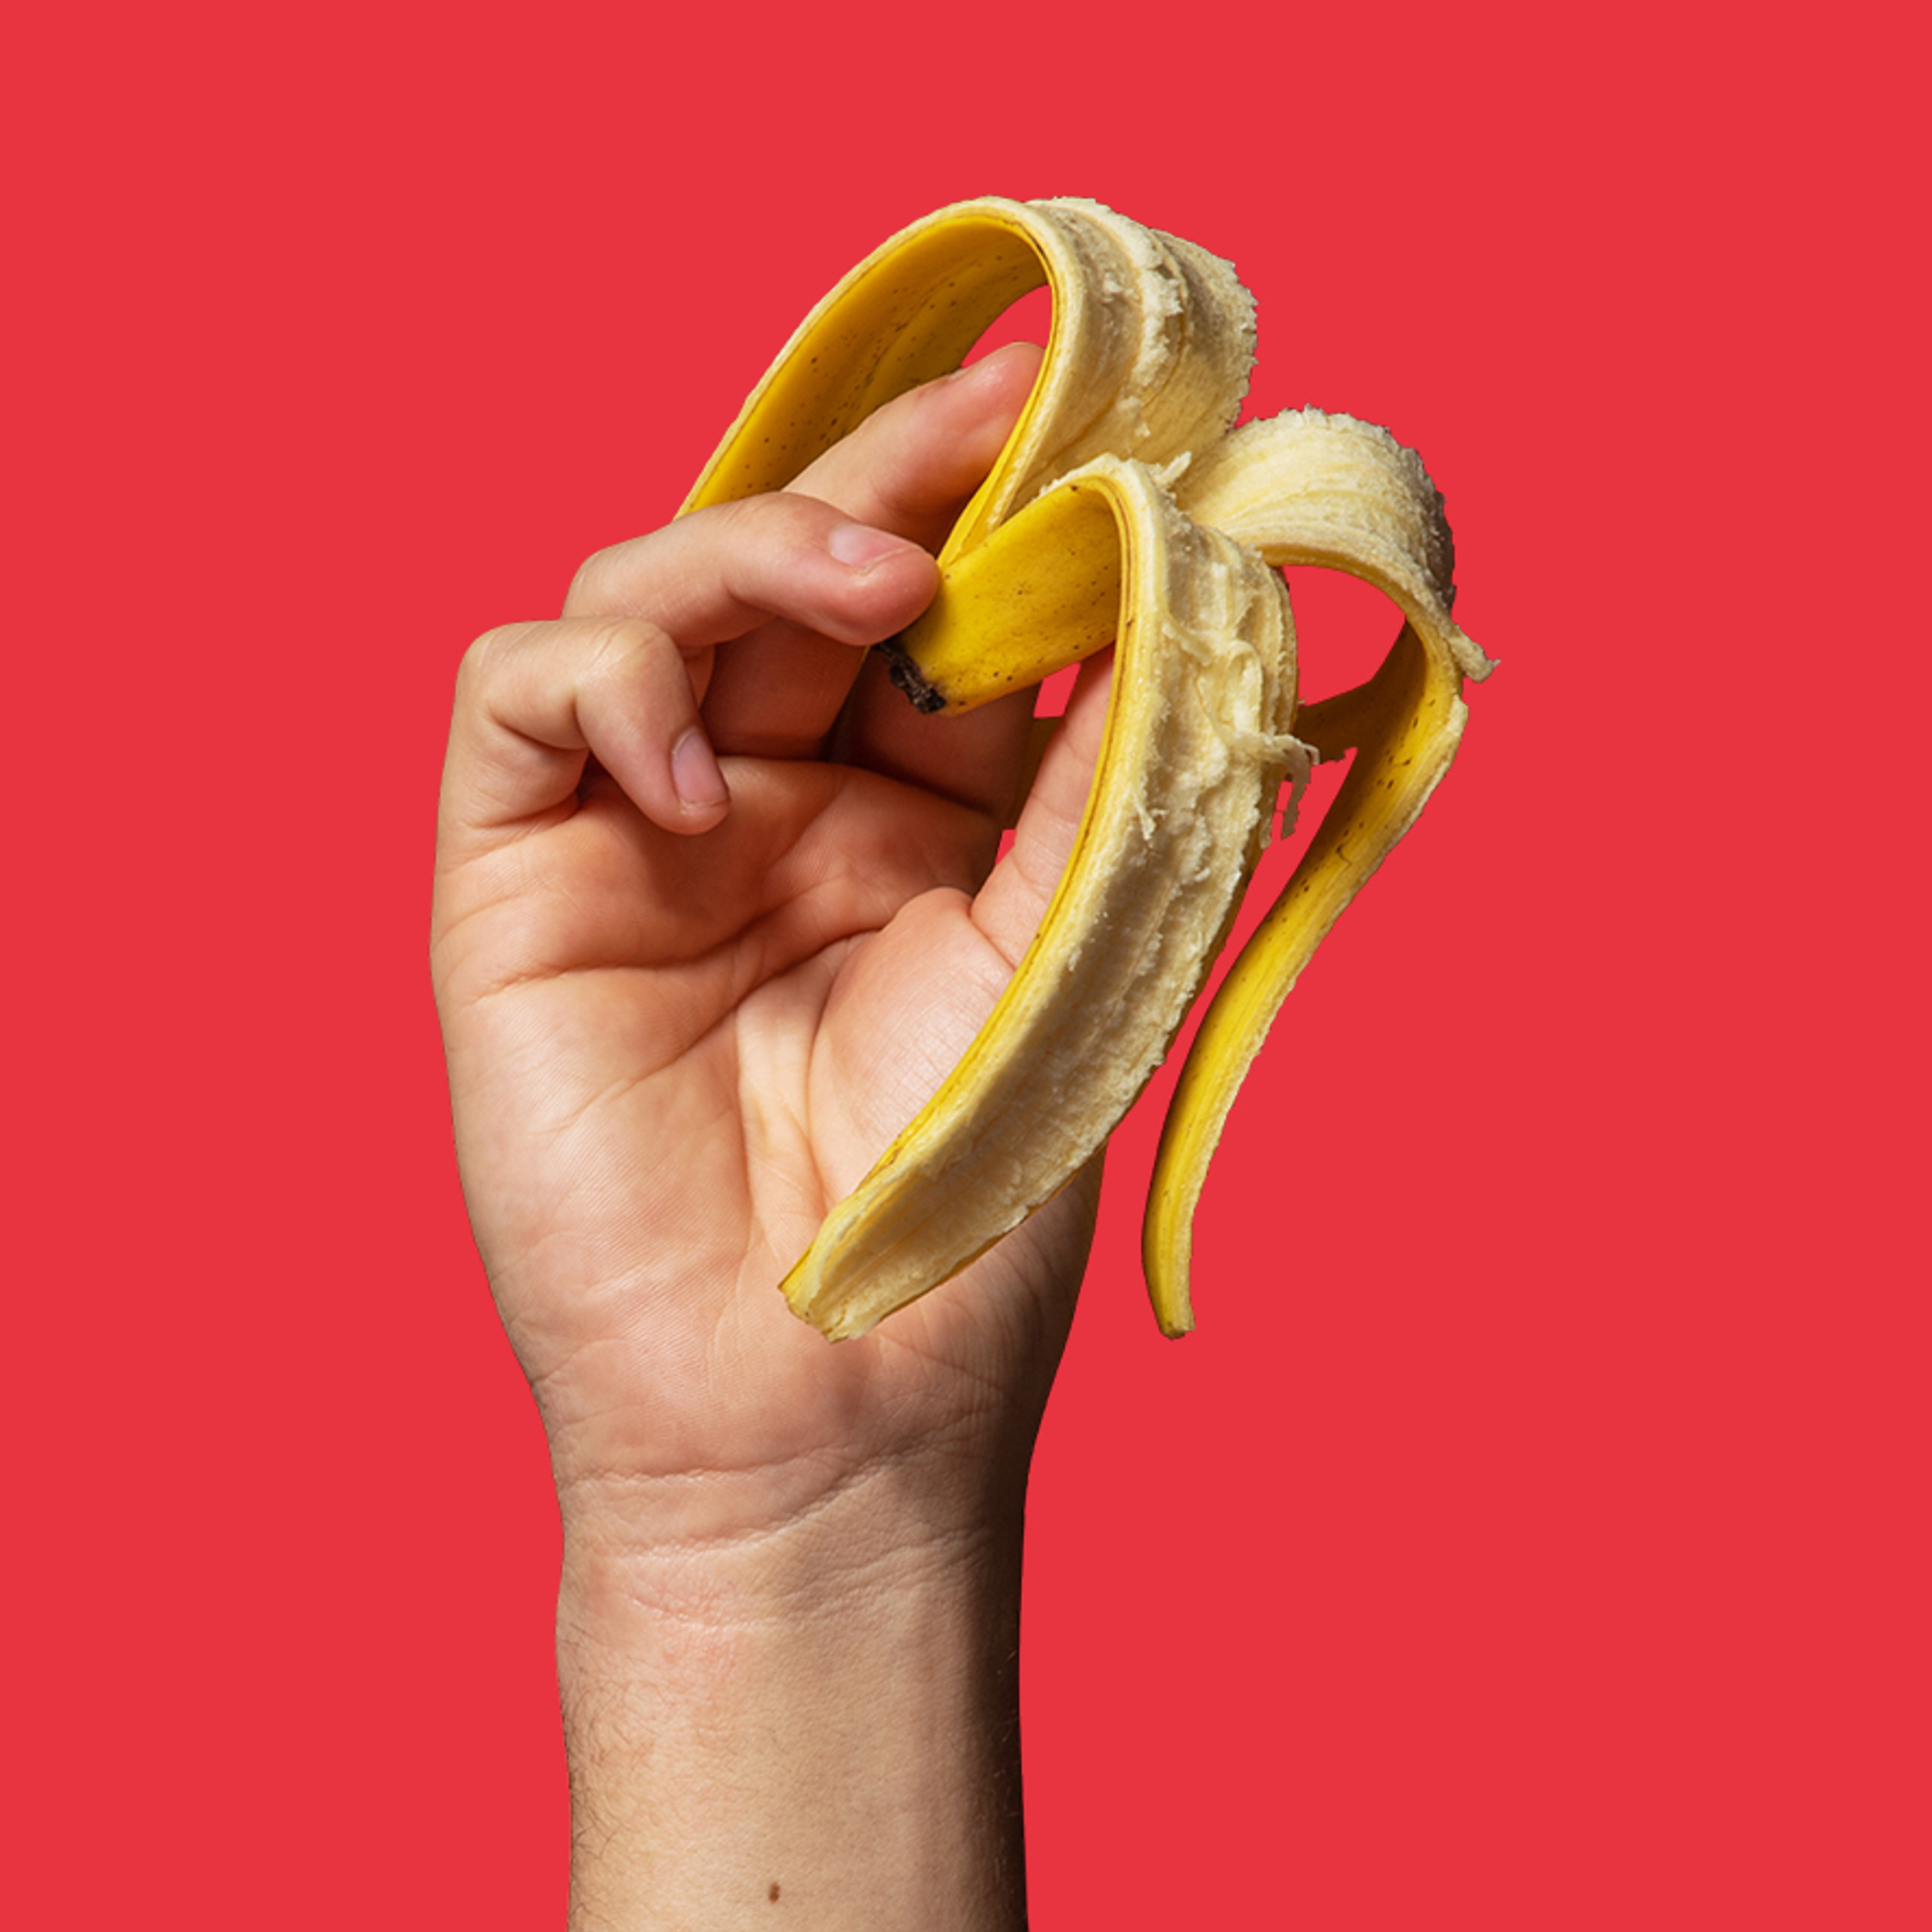 White hand holding a banana skin